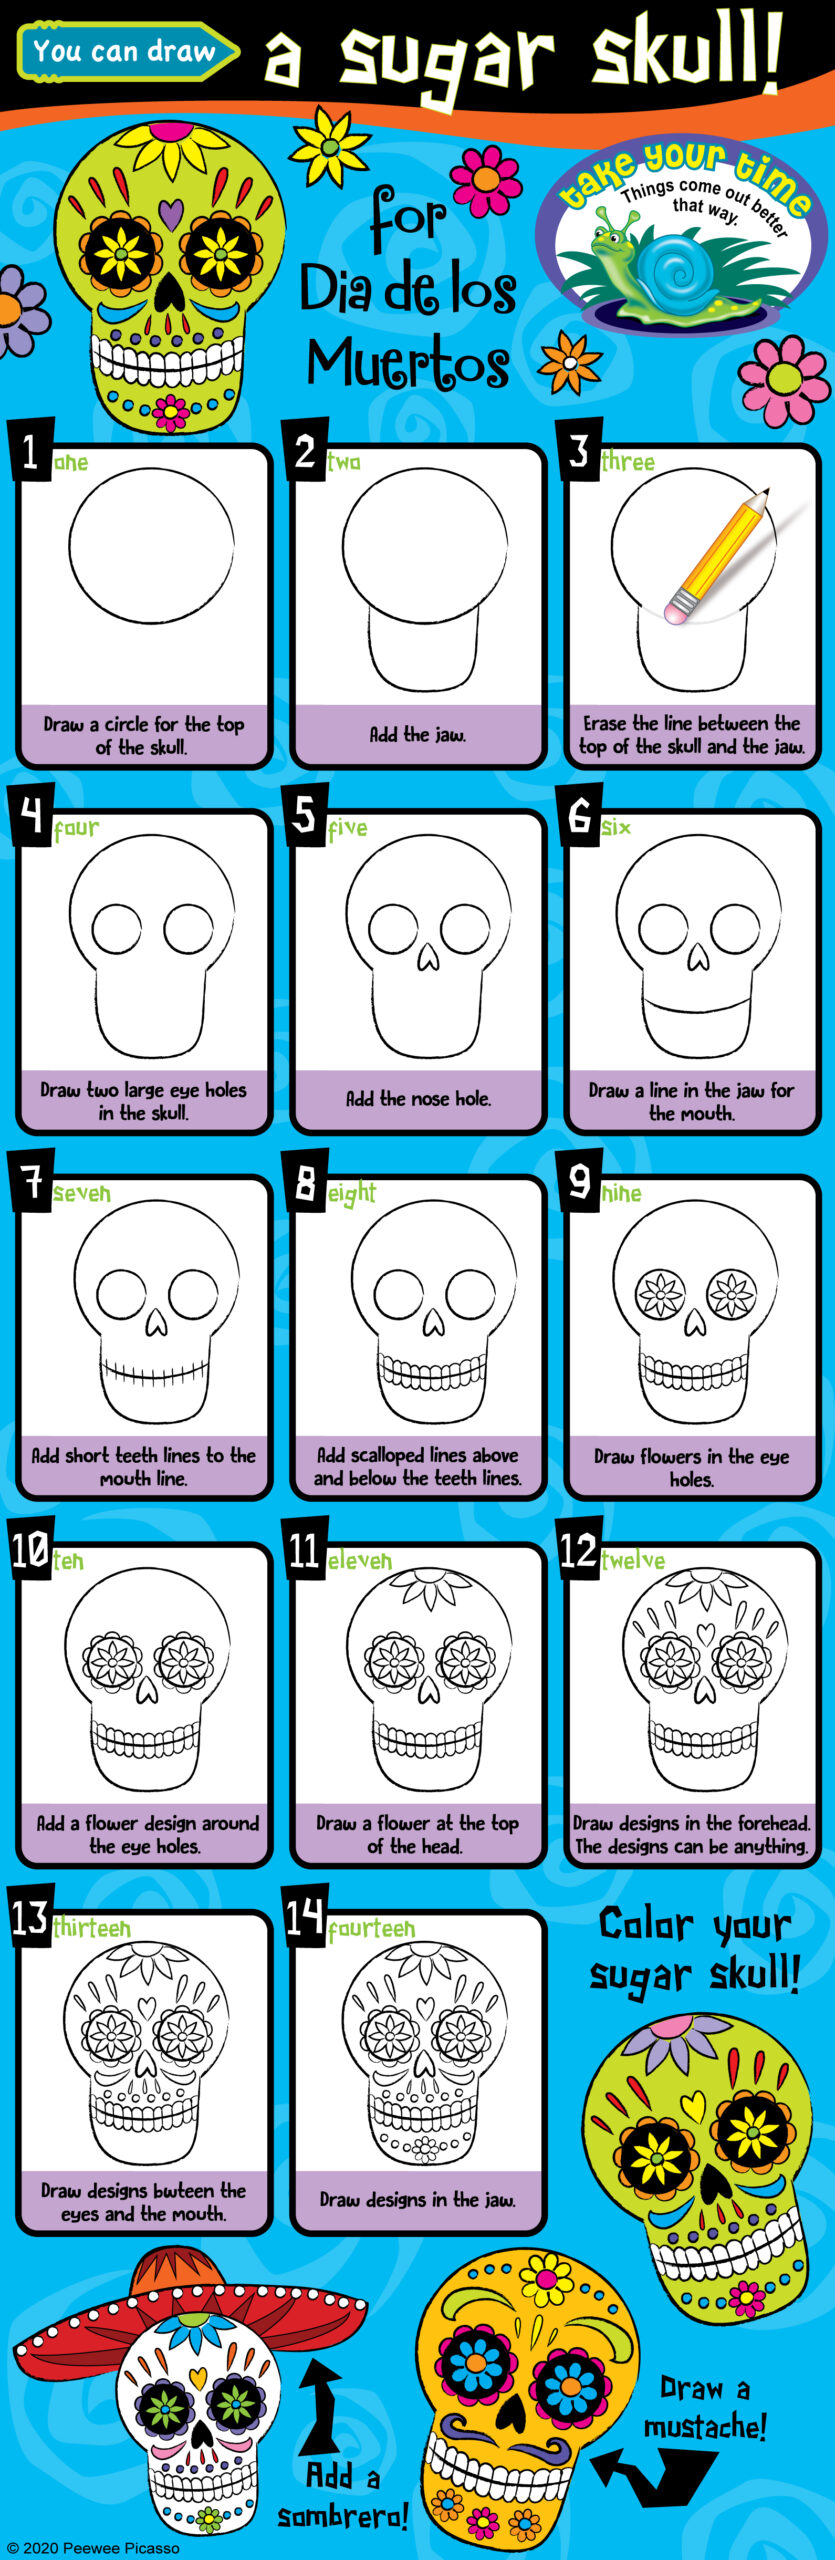 how to draw sugar skulls